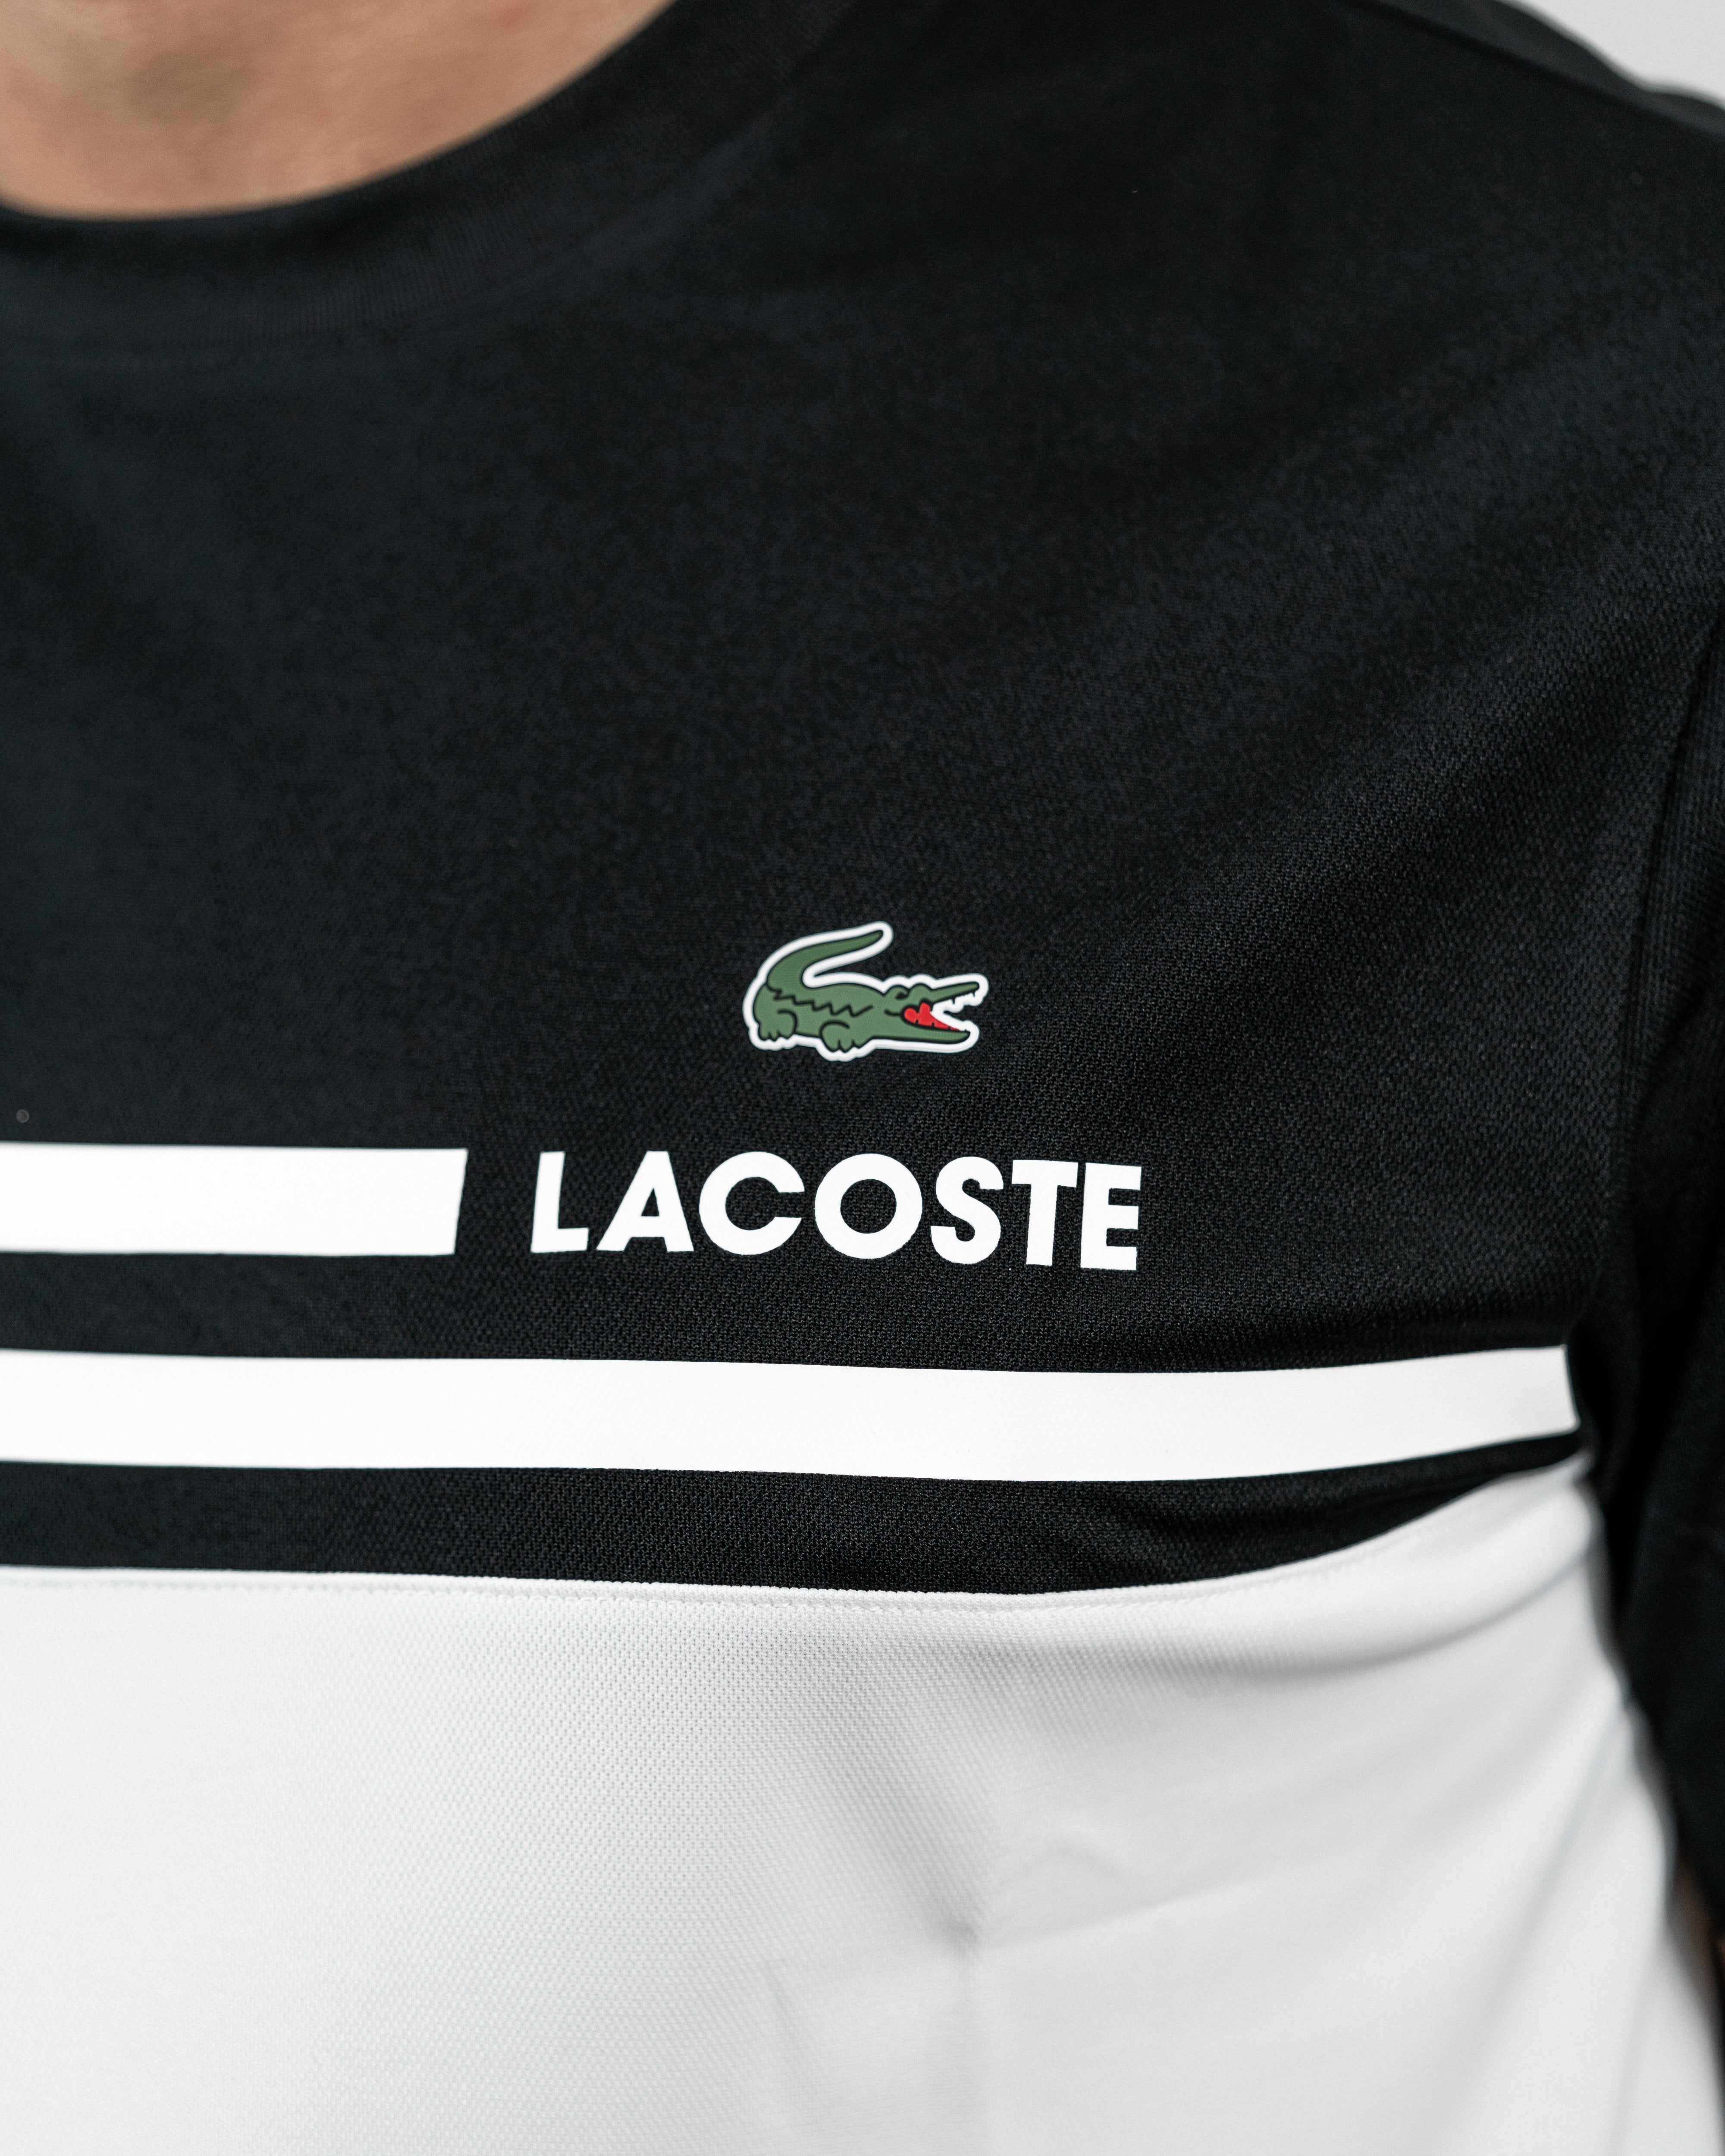 Lacoste Novak Djokovic Tennis T-shirt Sort/Hvid